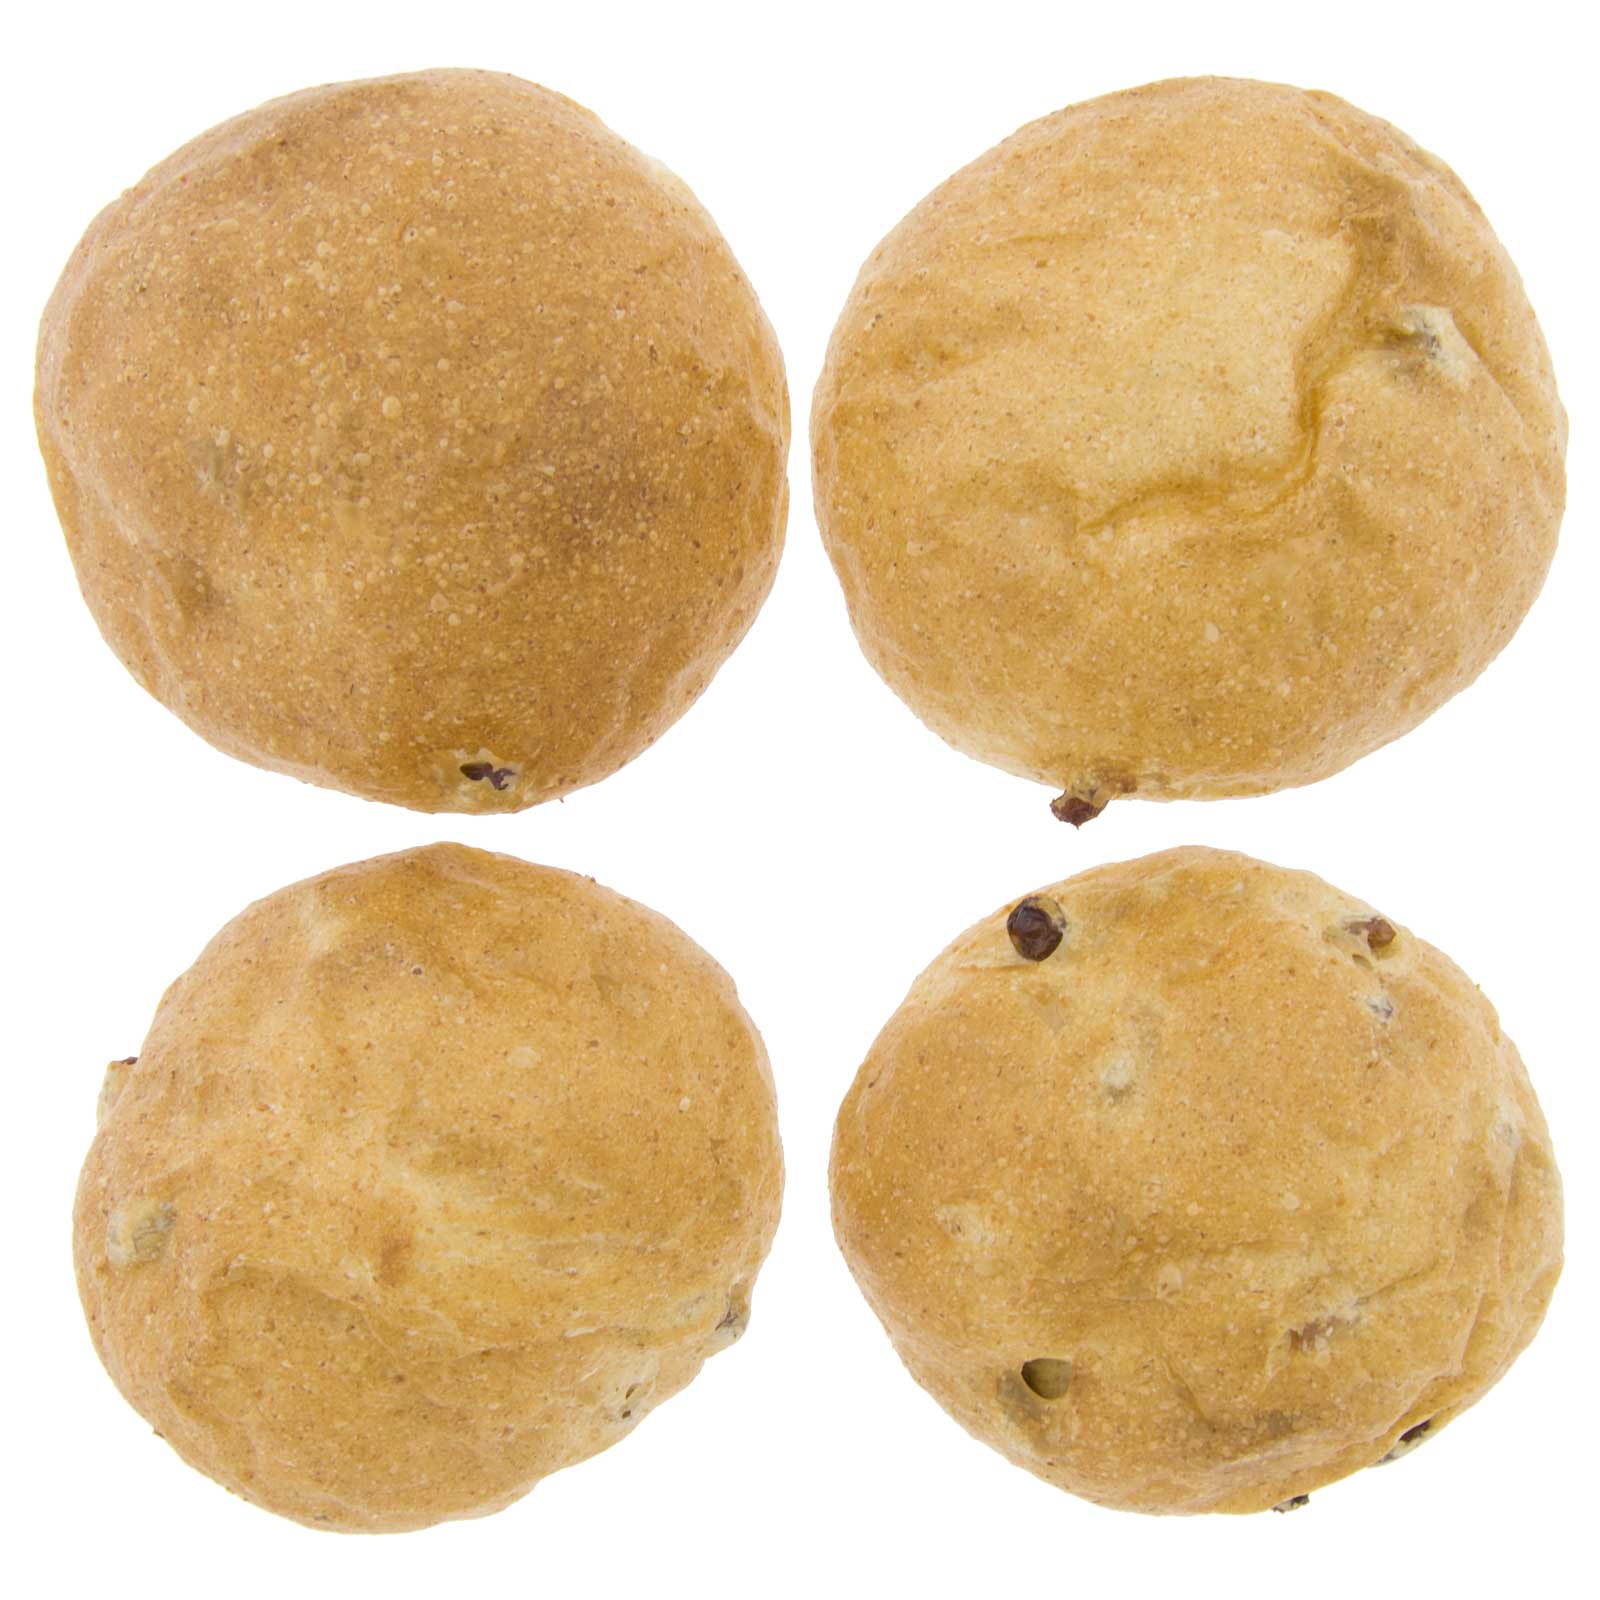 Buns wheat brioche with raisins 250g (4x65g) Organic artisanal elaboration